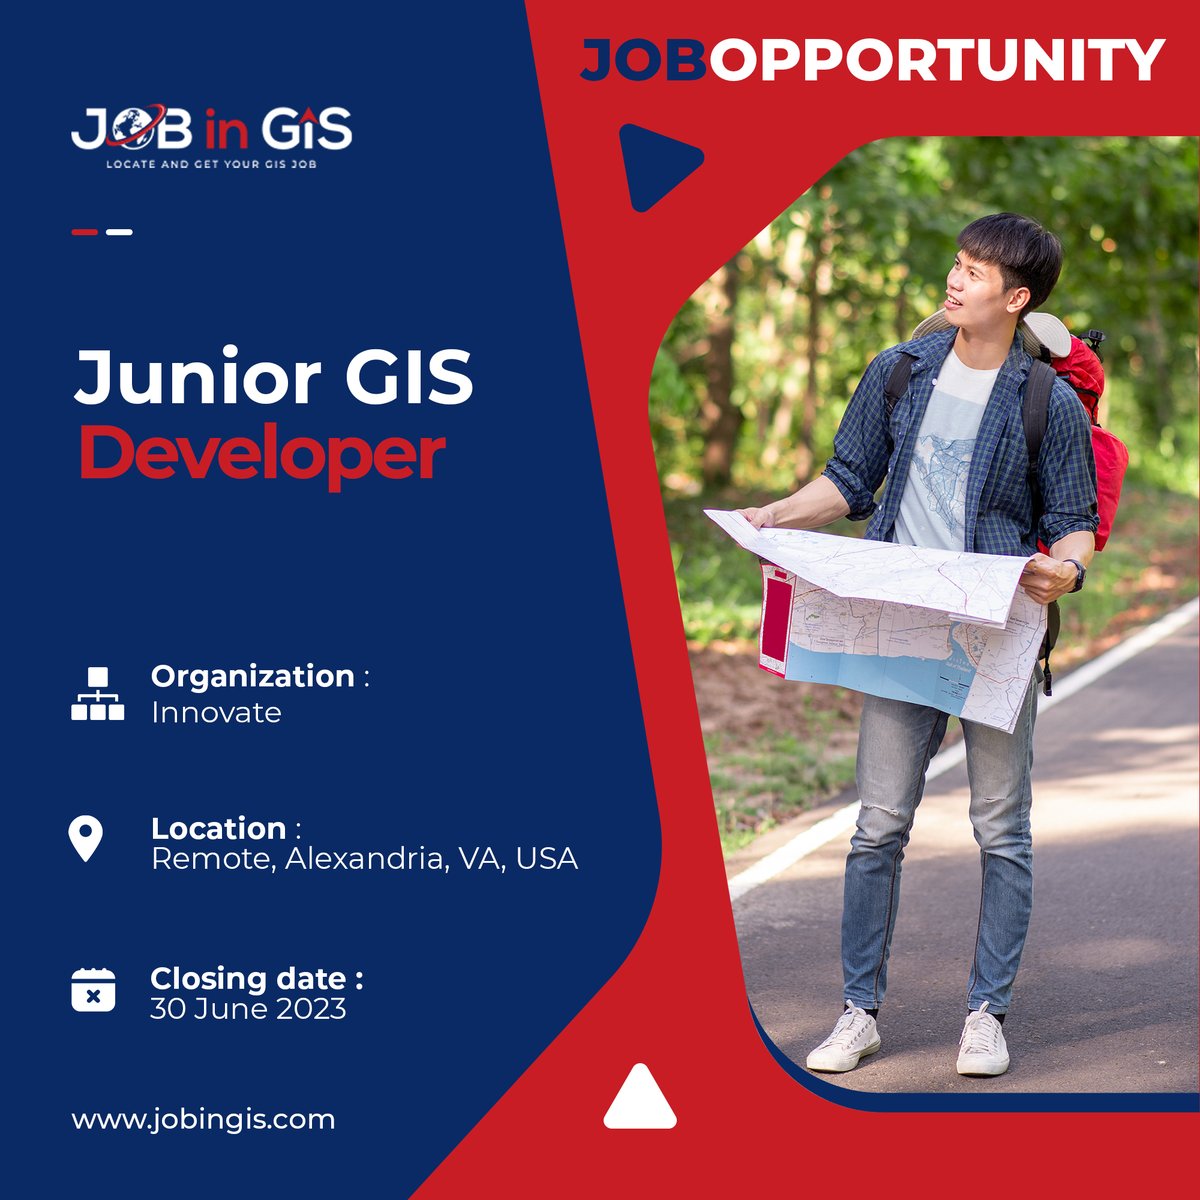 #jobingis : Innovate is hiring a Junior GIS Developer
📍Location : #remotework, #Alexandria, VA, #USA 

Apply here 👉 : jobingis.com/jobs/junior-gi…

#Jobs #jobsearch #cartography #Geography #mapping #GIS #geospatial #remotesensing #gisjobs #gischat